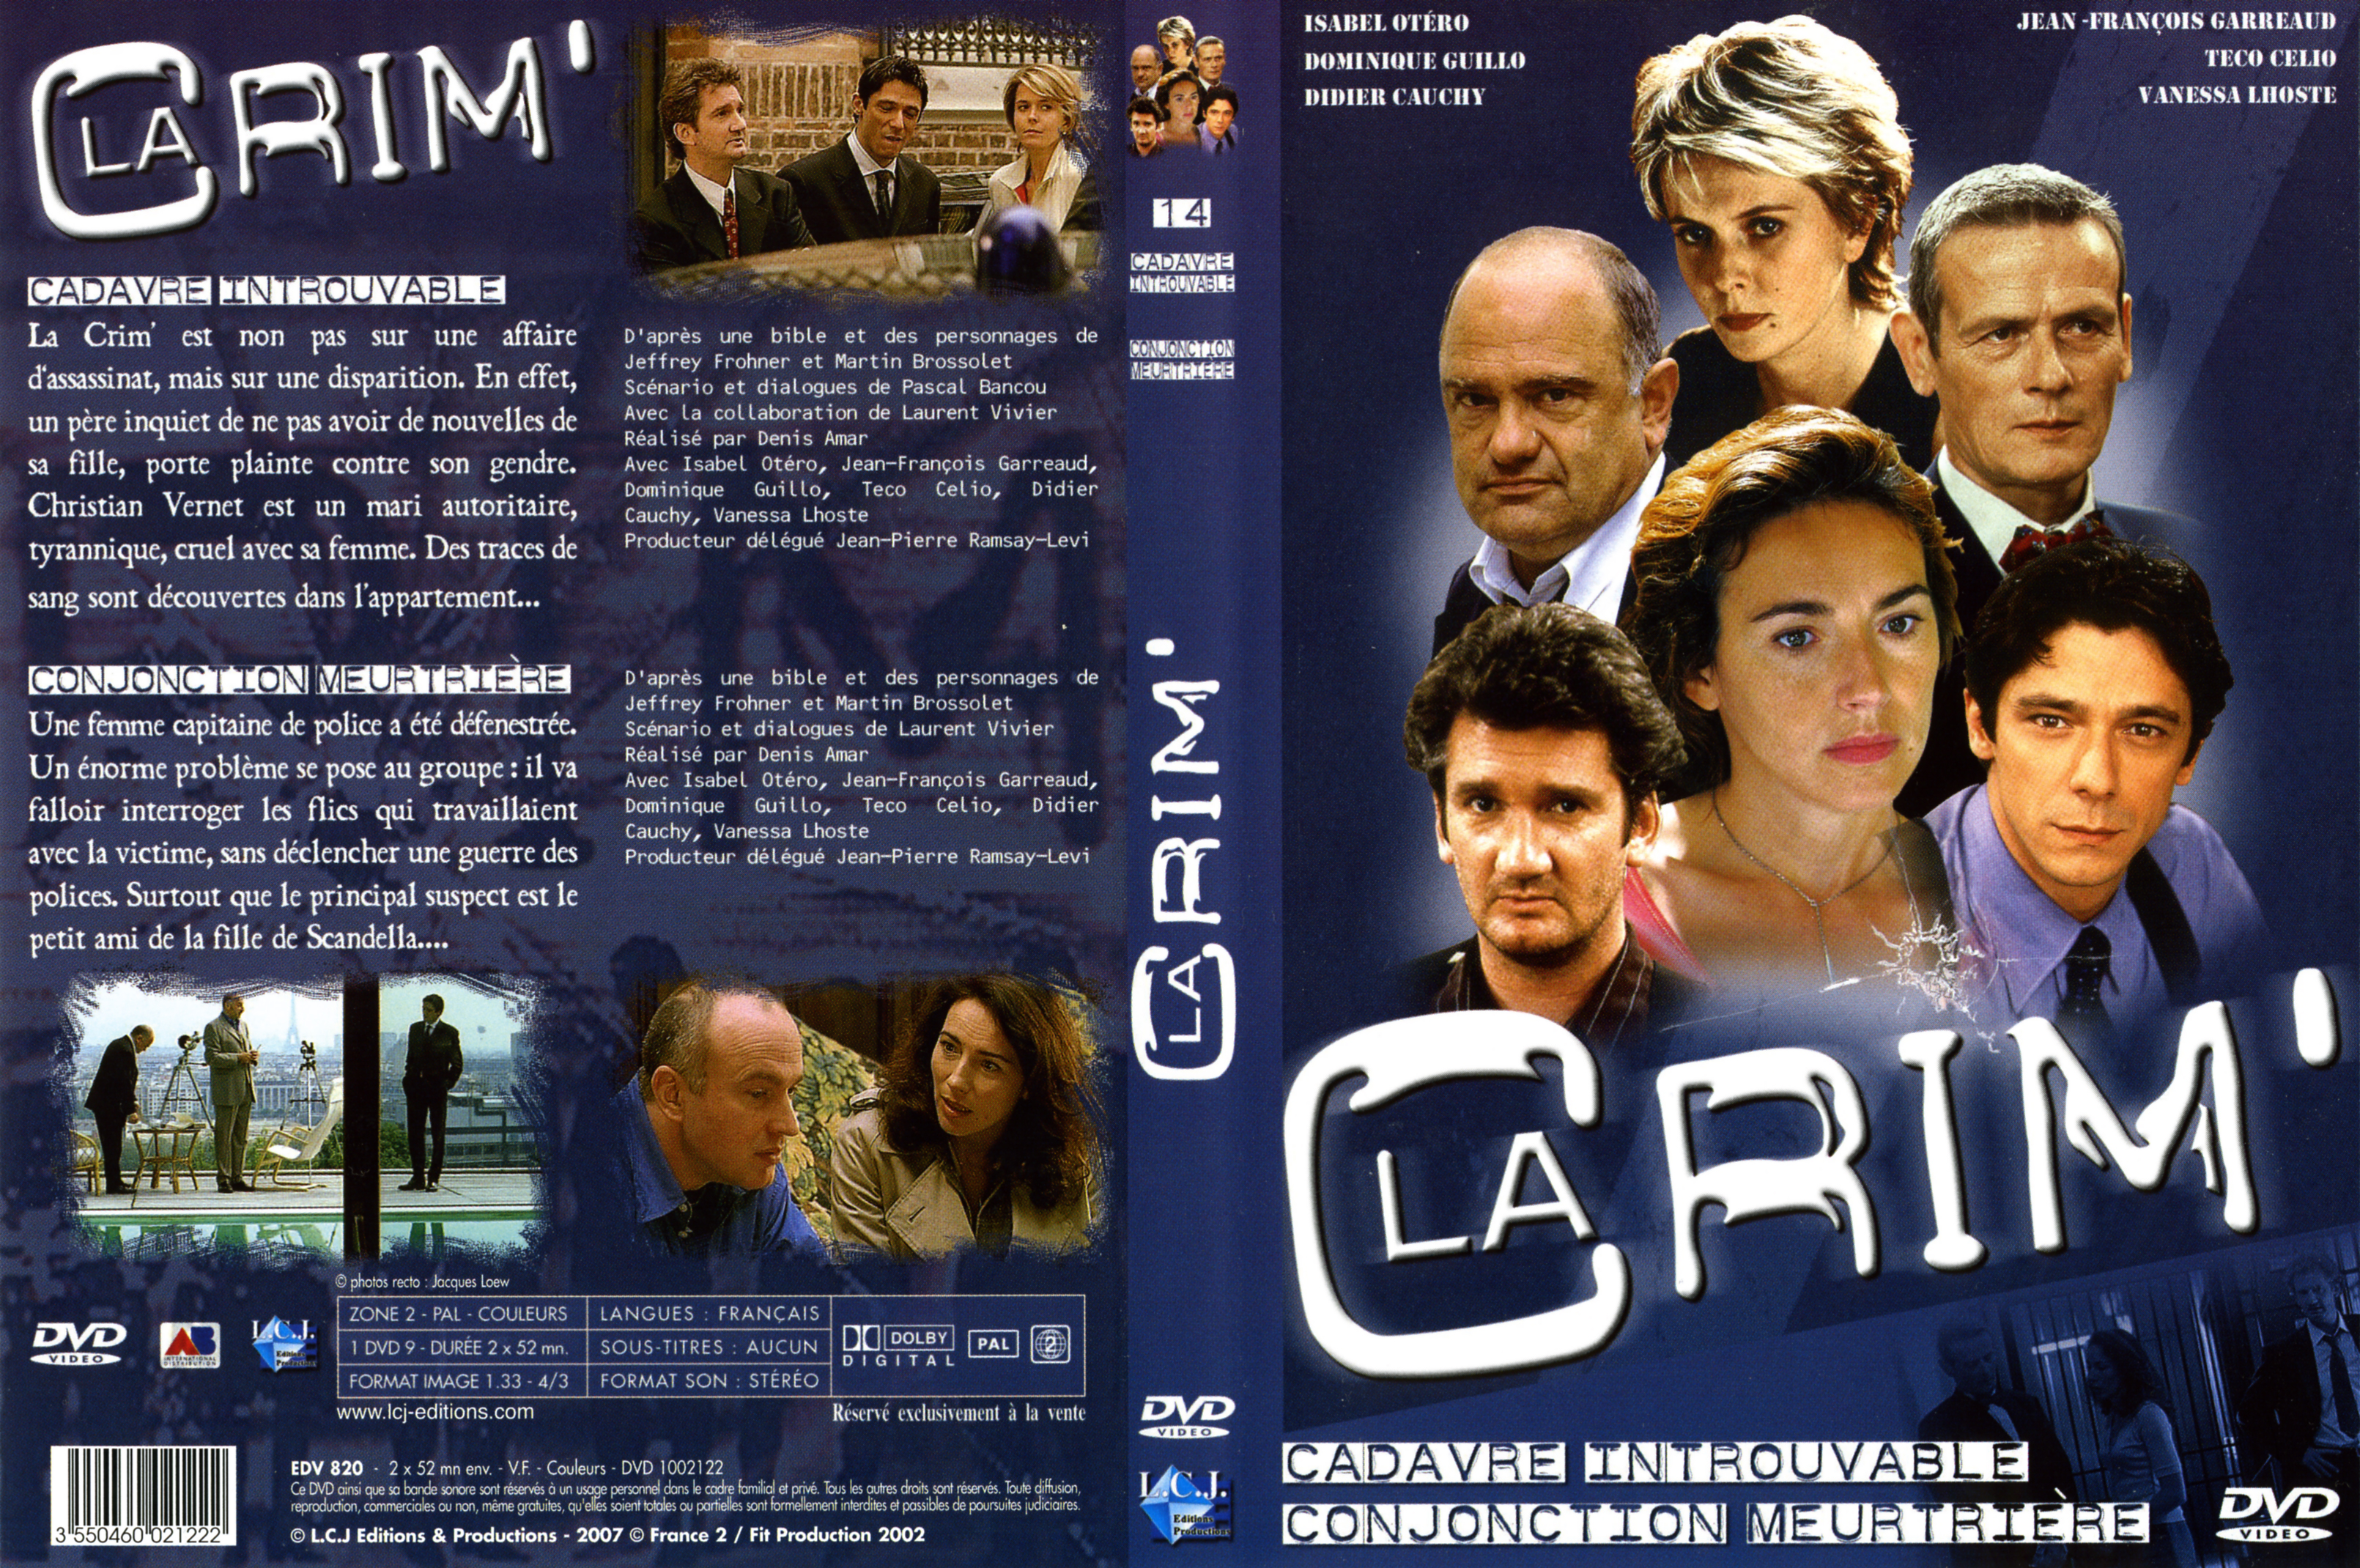 Jaquette DVD La crim vol 14